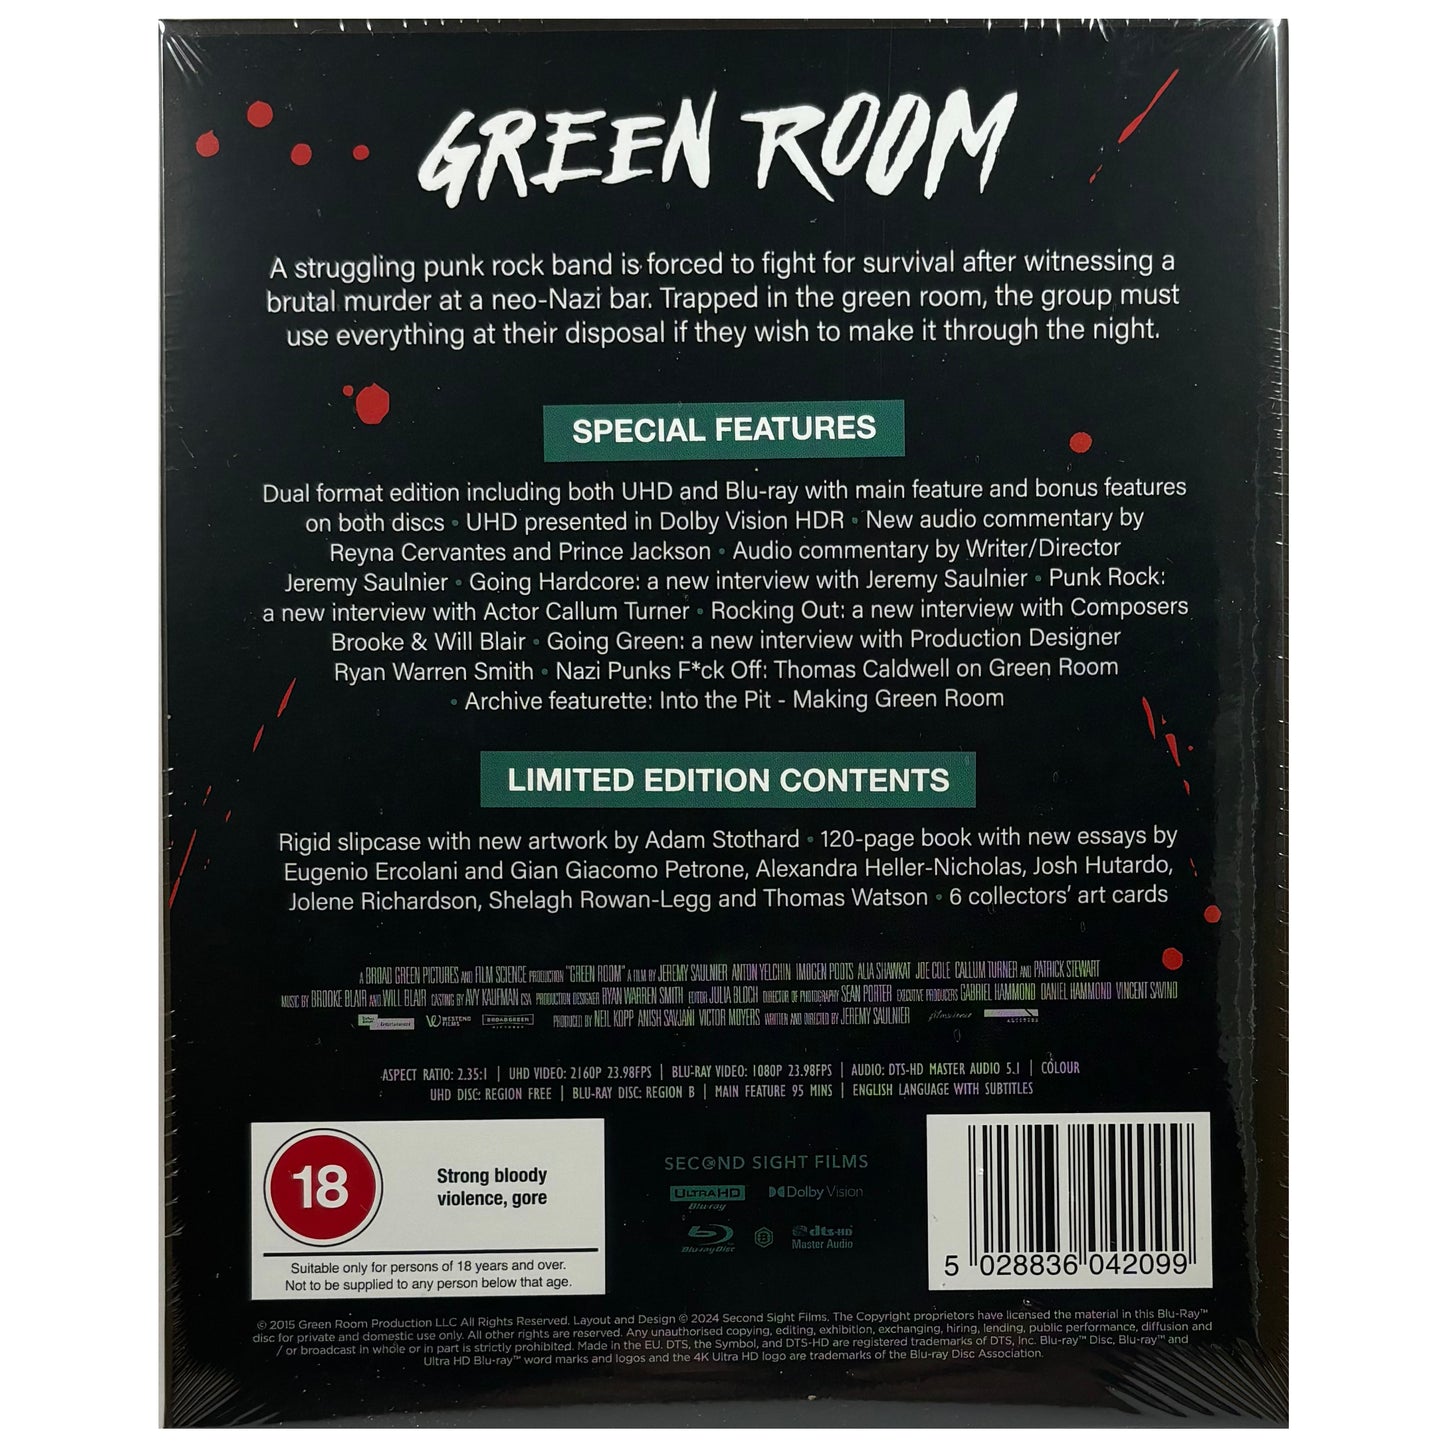 Green Room 4K Ultra HD + Blu-Ray - Limited Edition